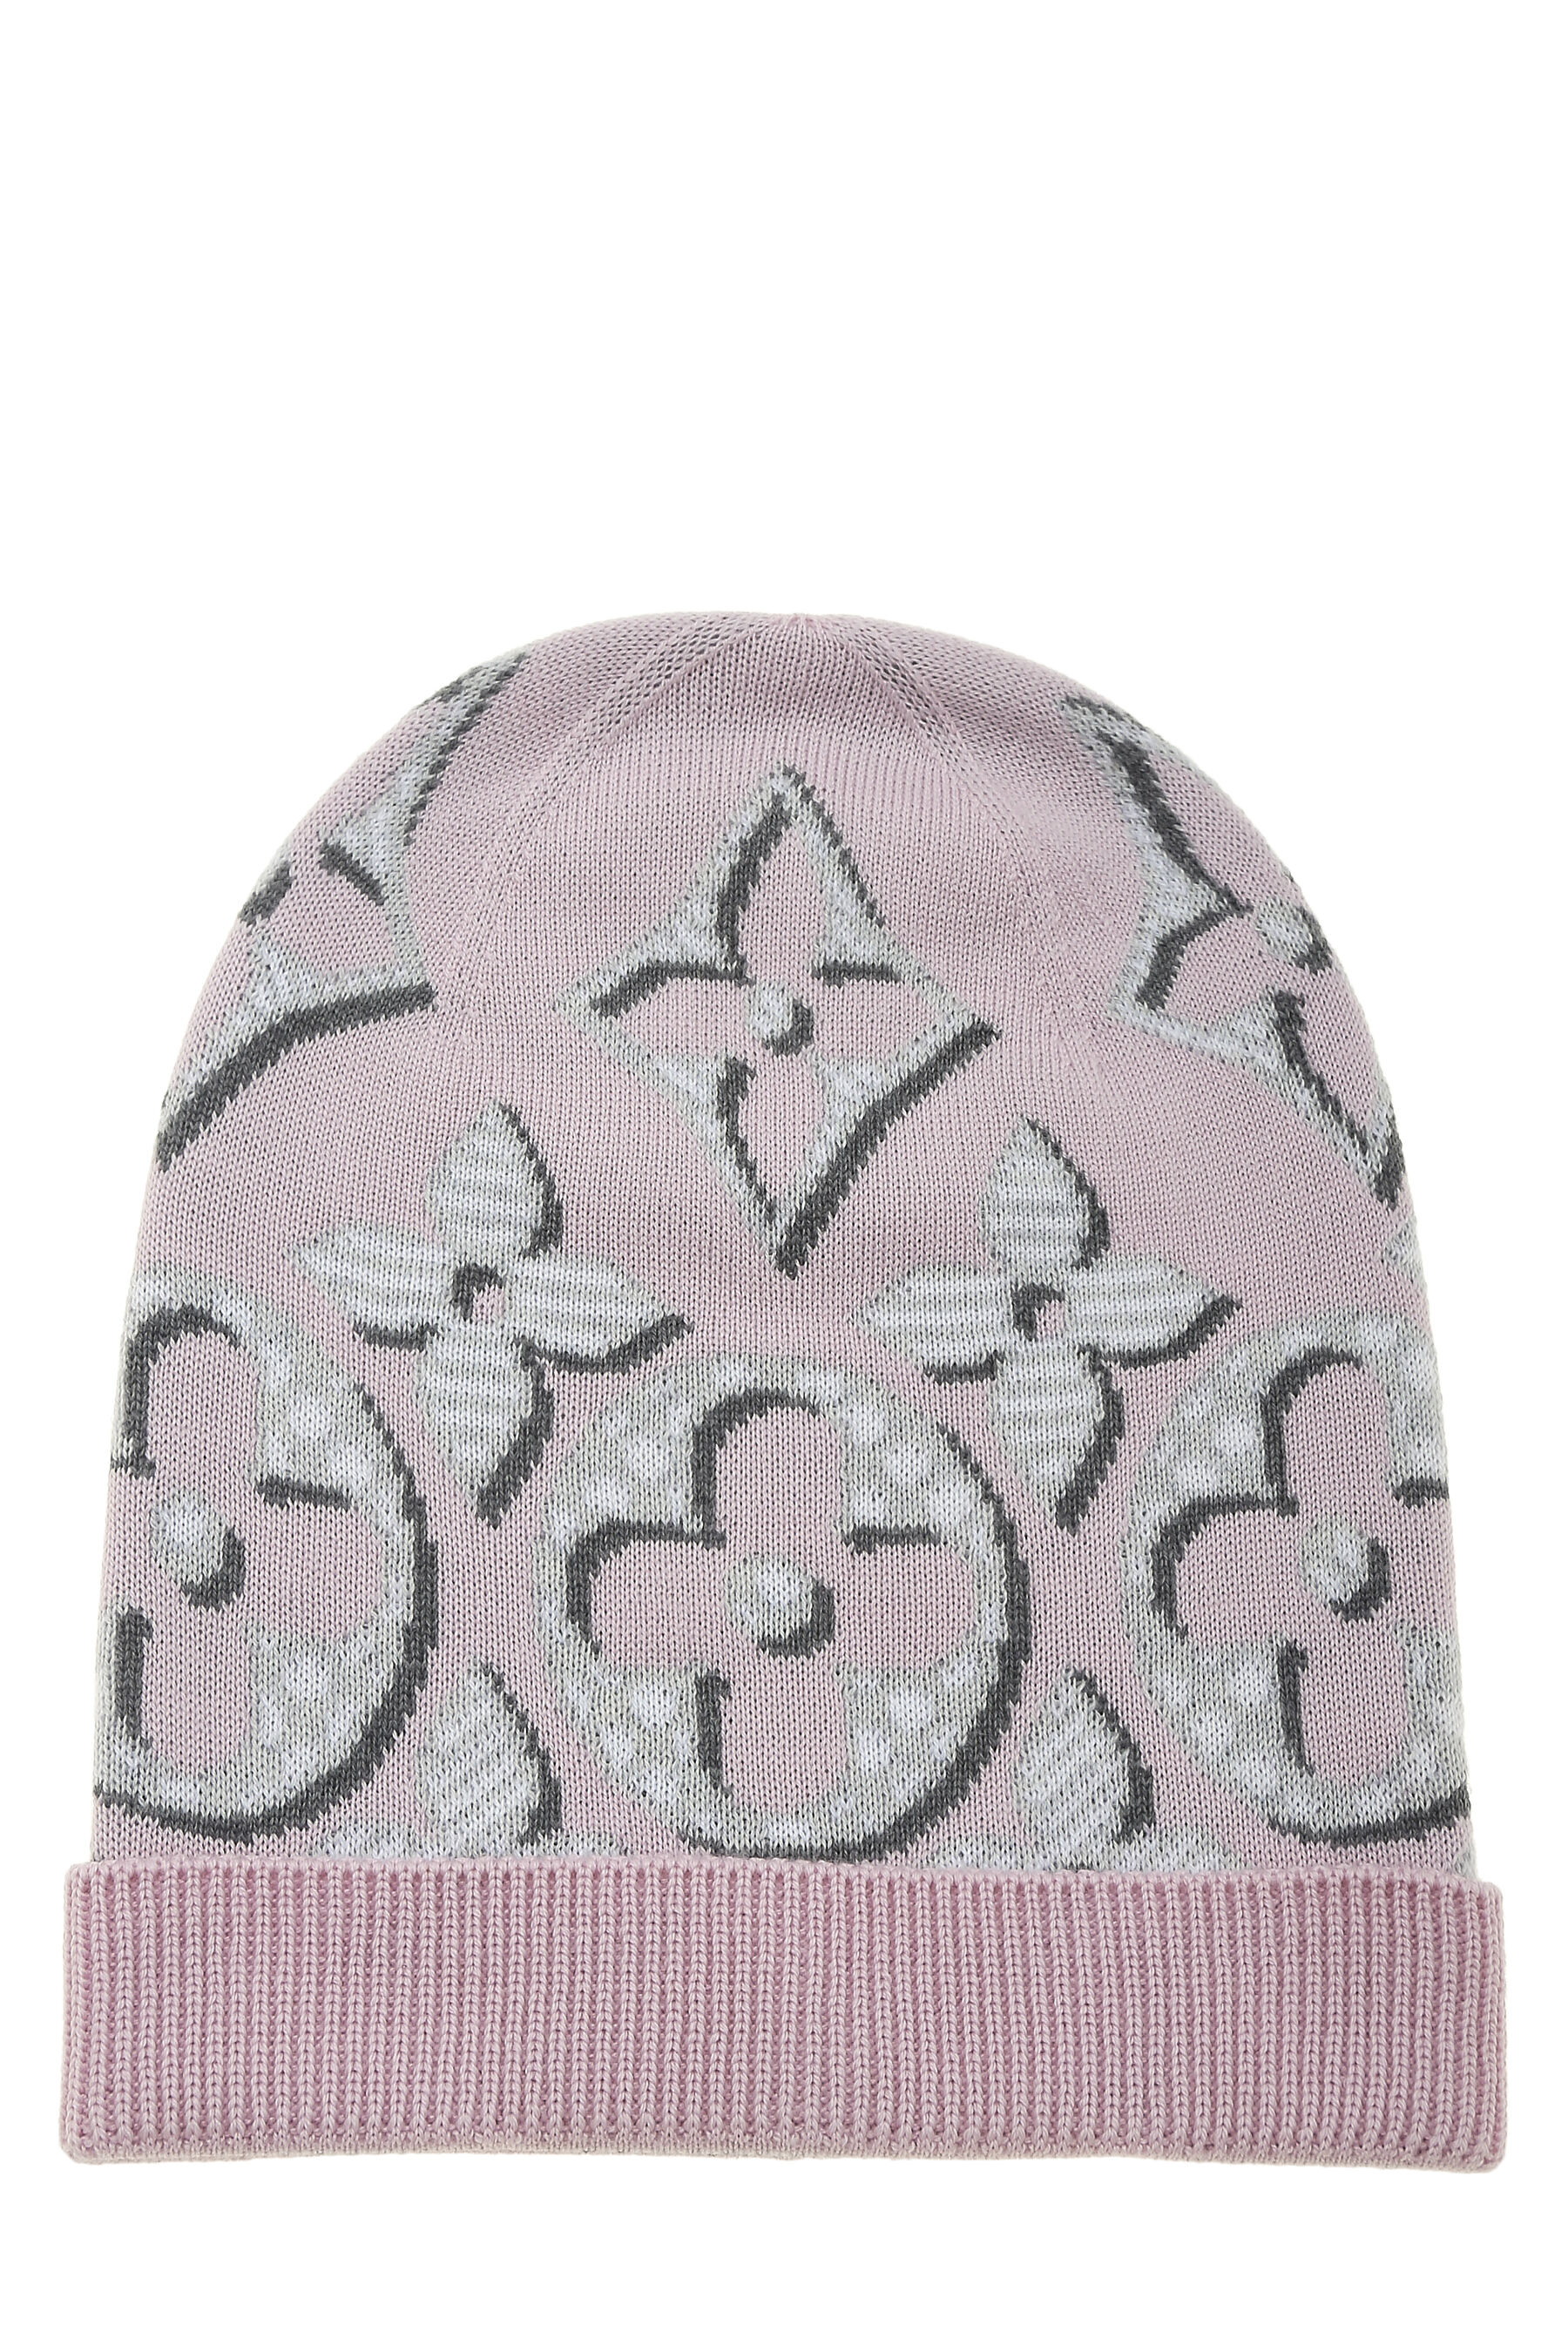 Wool beanie Louis Vuitton Pink size M International in Wool - 30462154